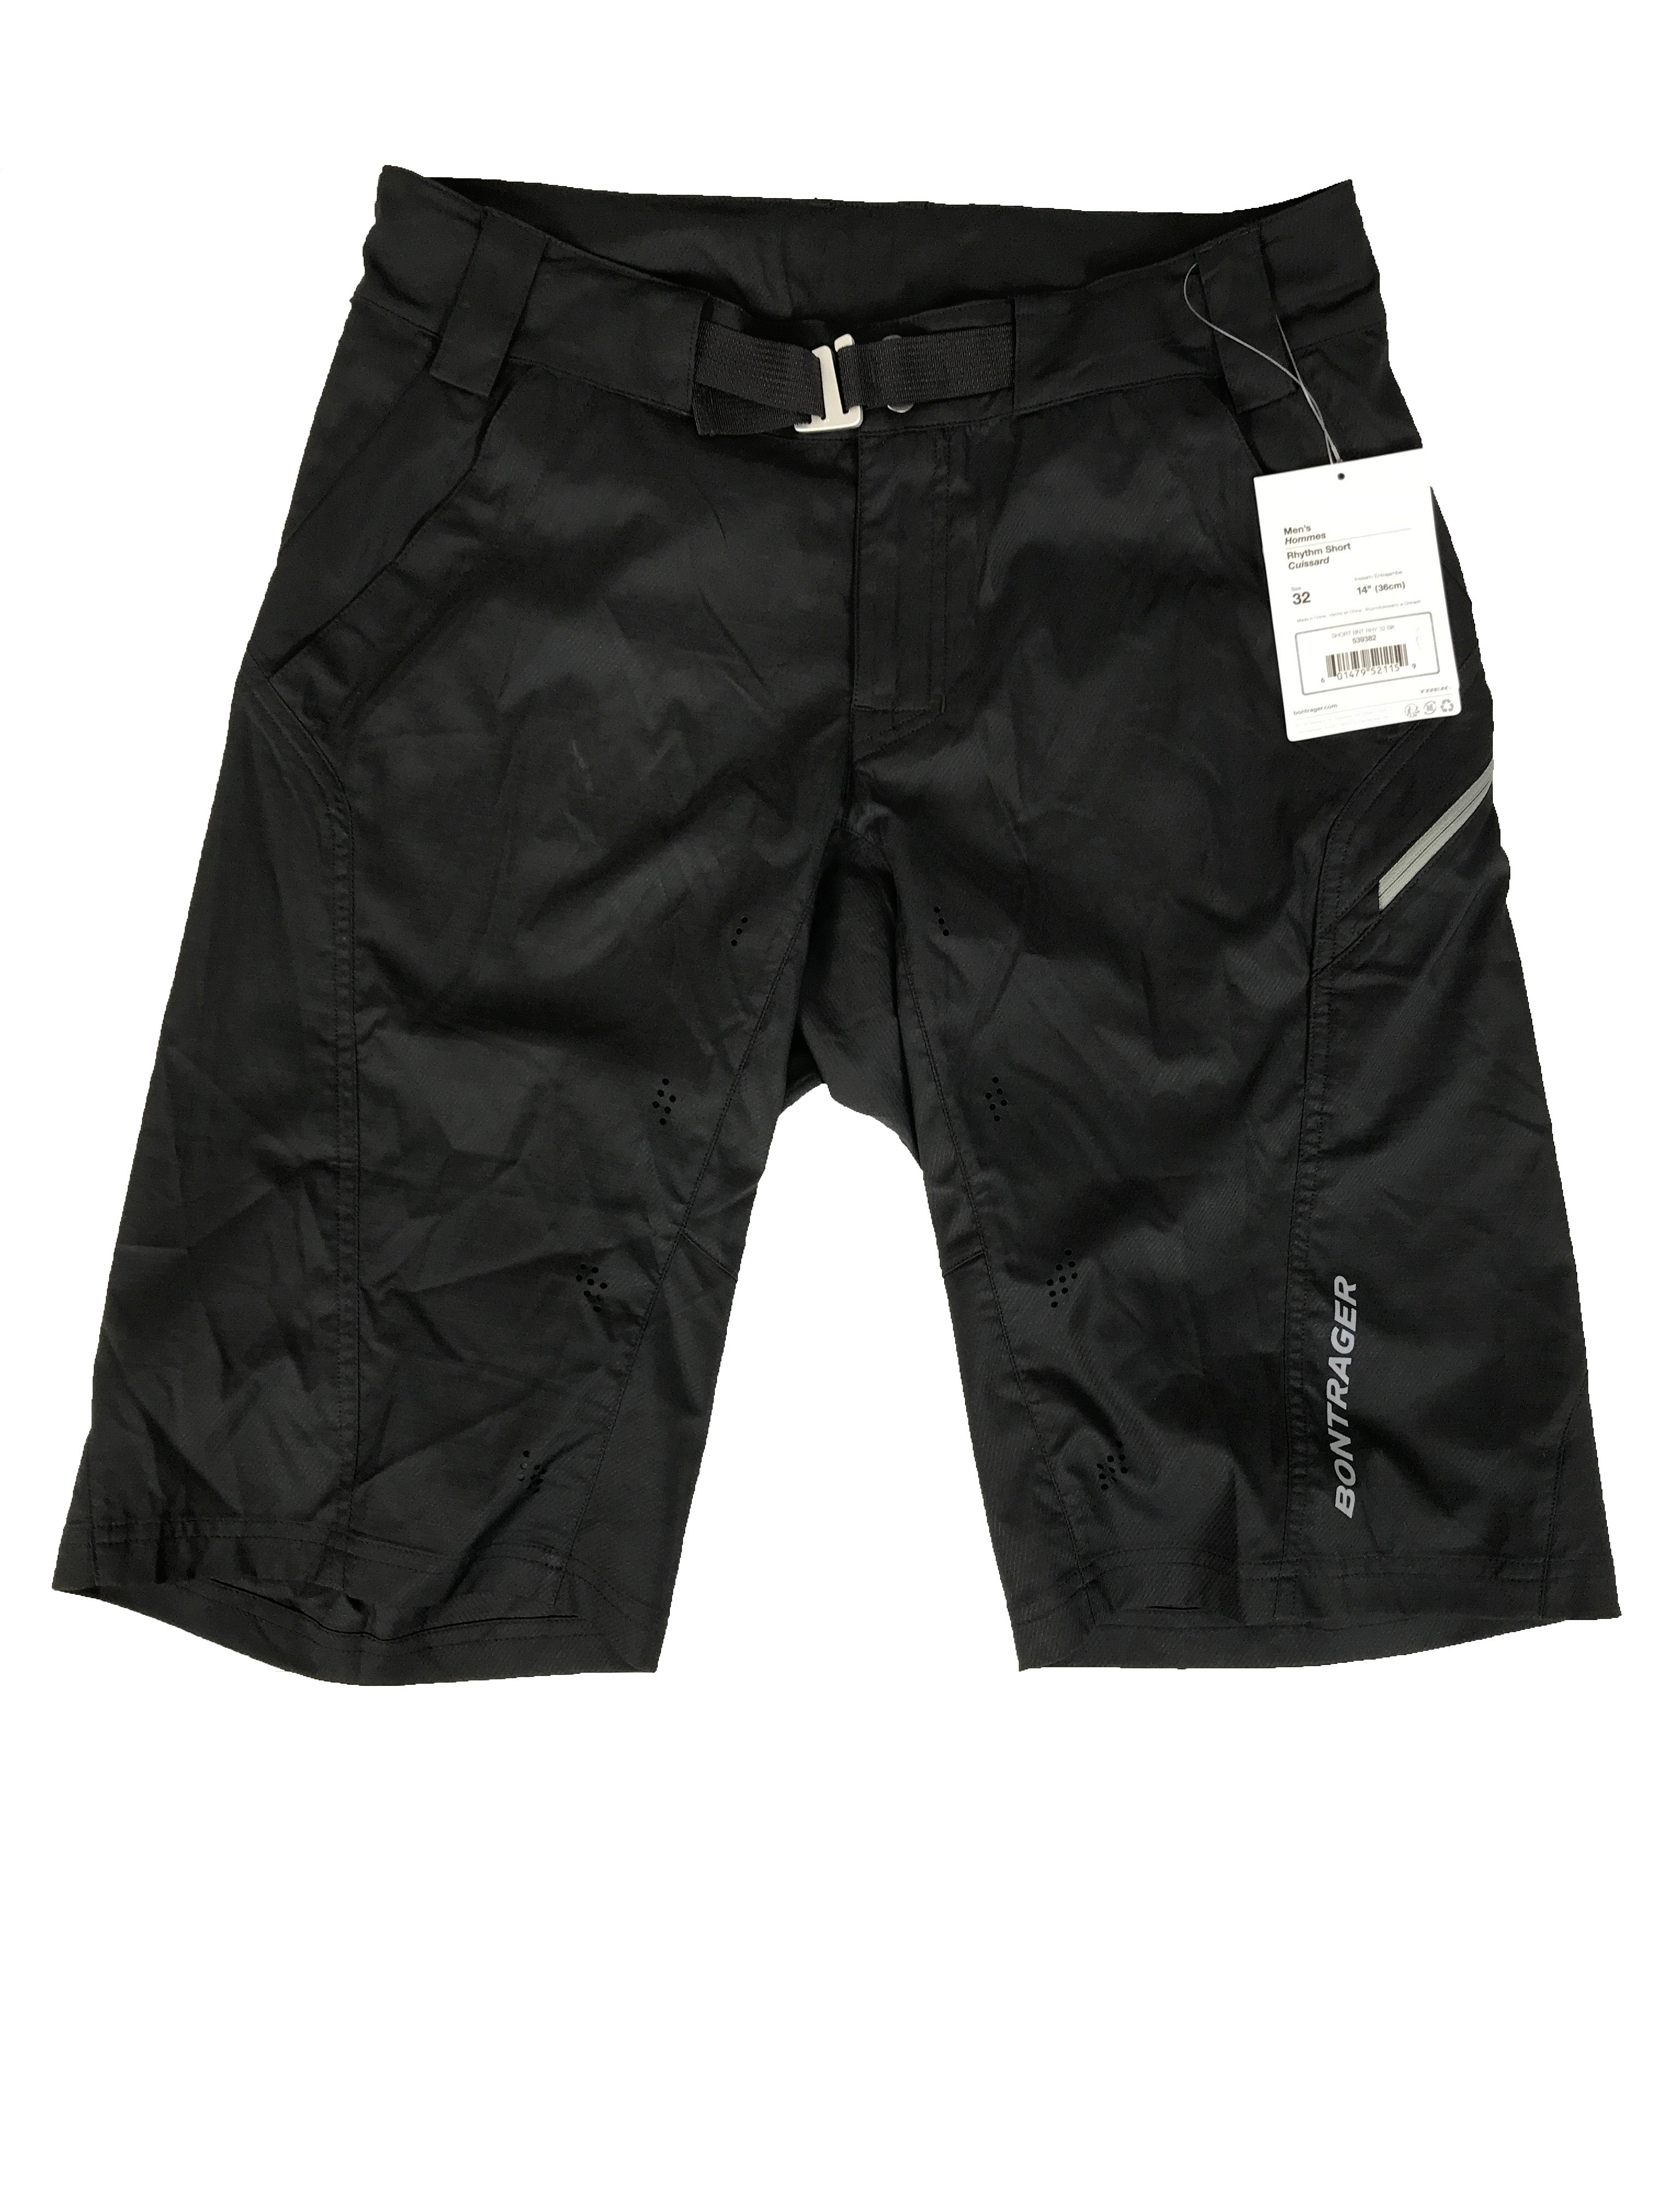 Bontrager Rhythm Black Shorts Men's Size 32 NWT